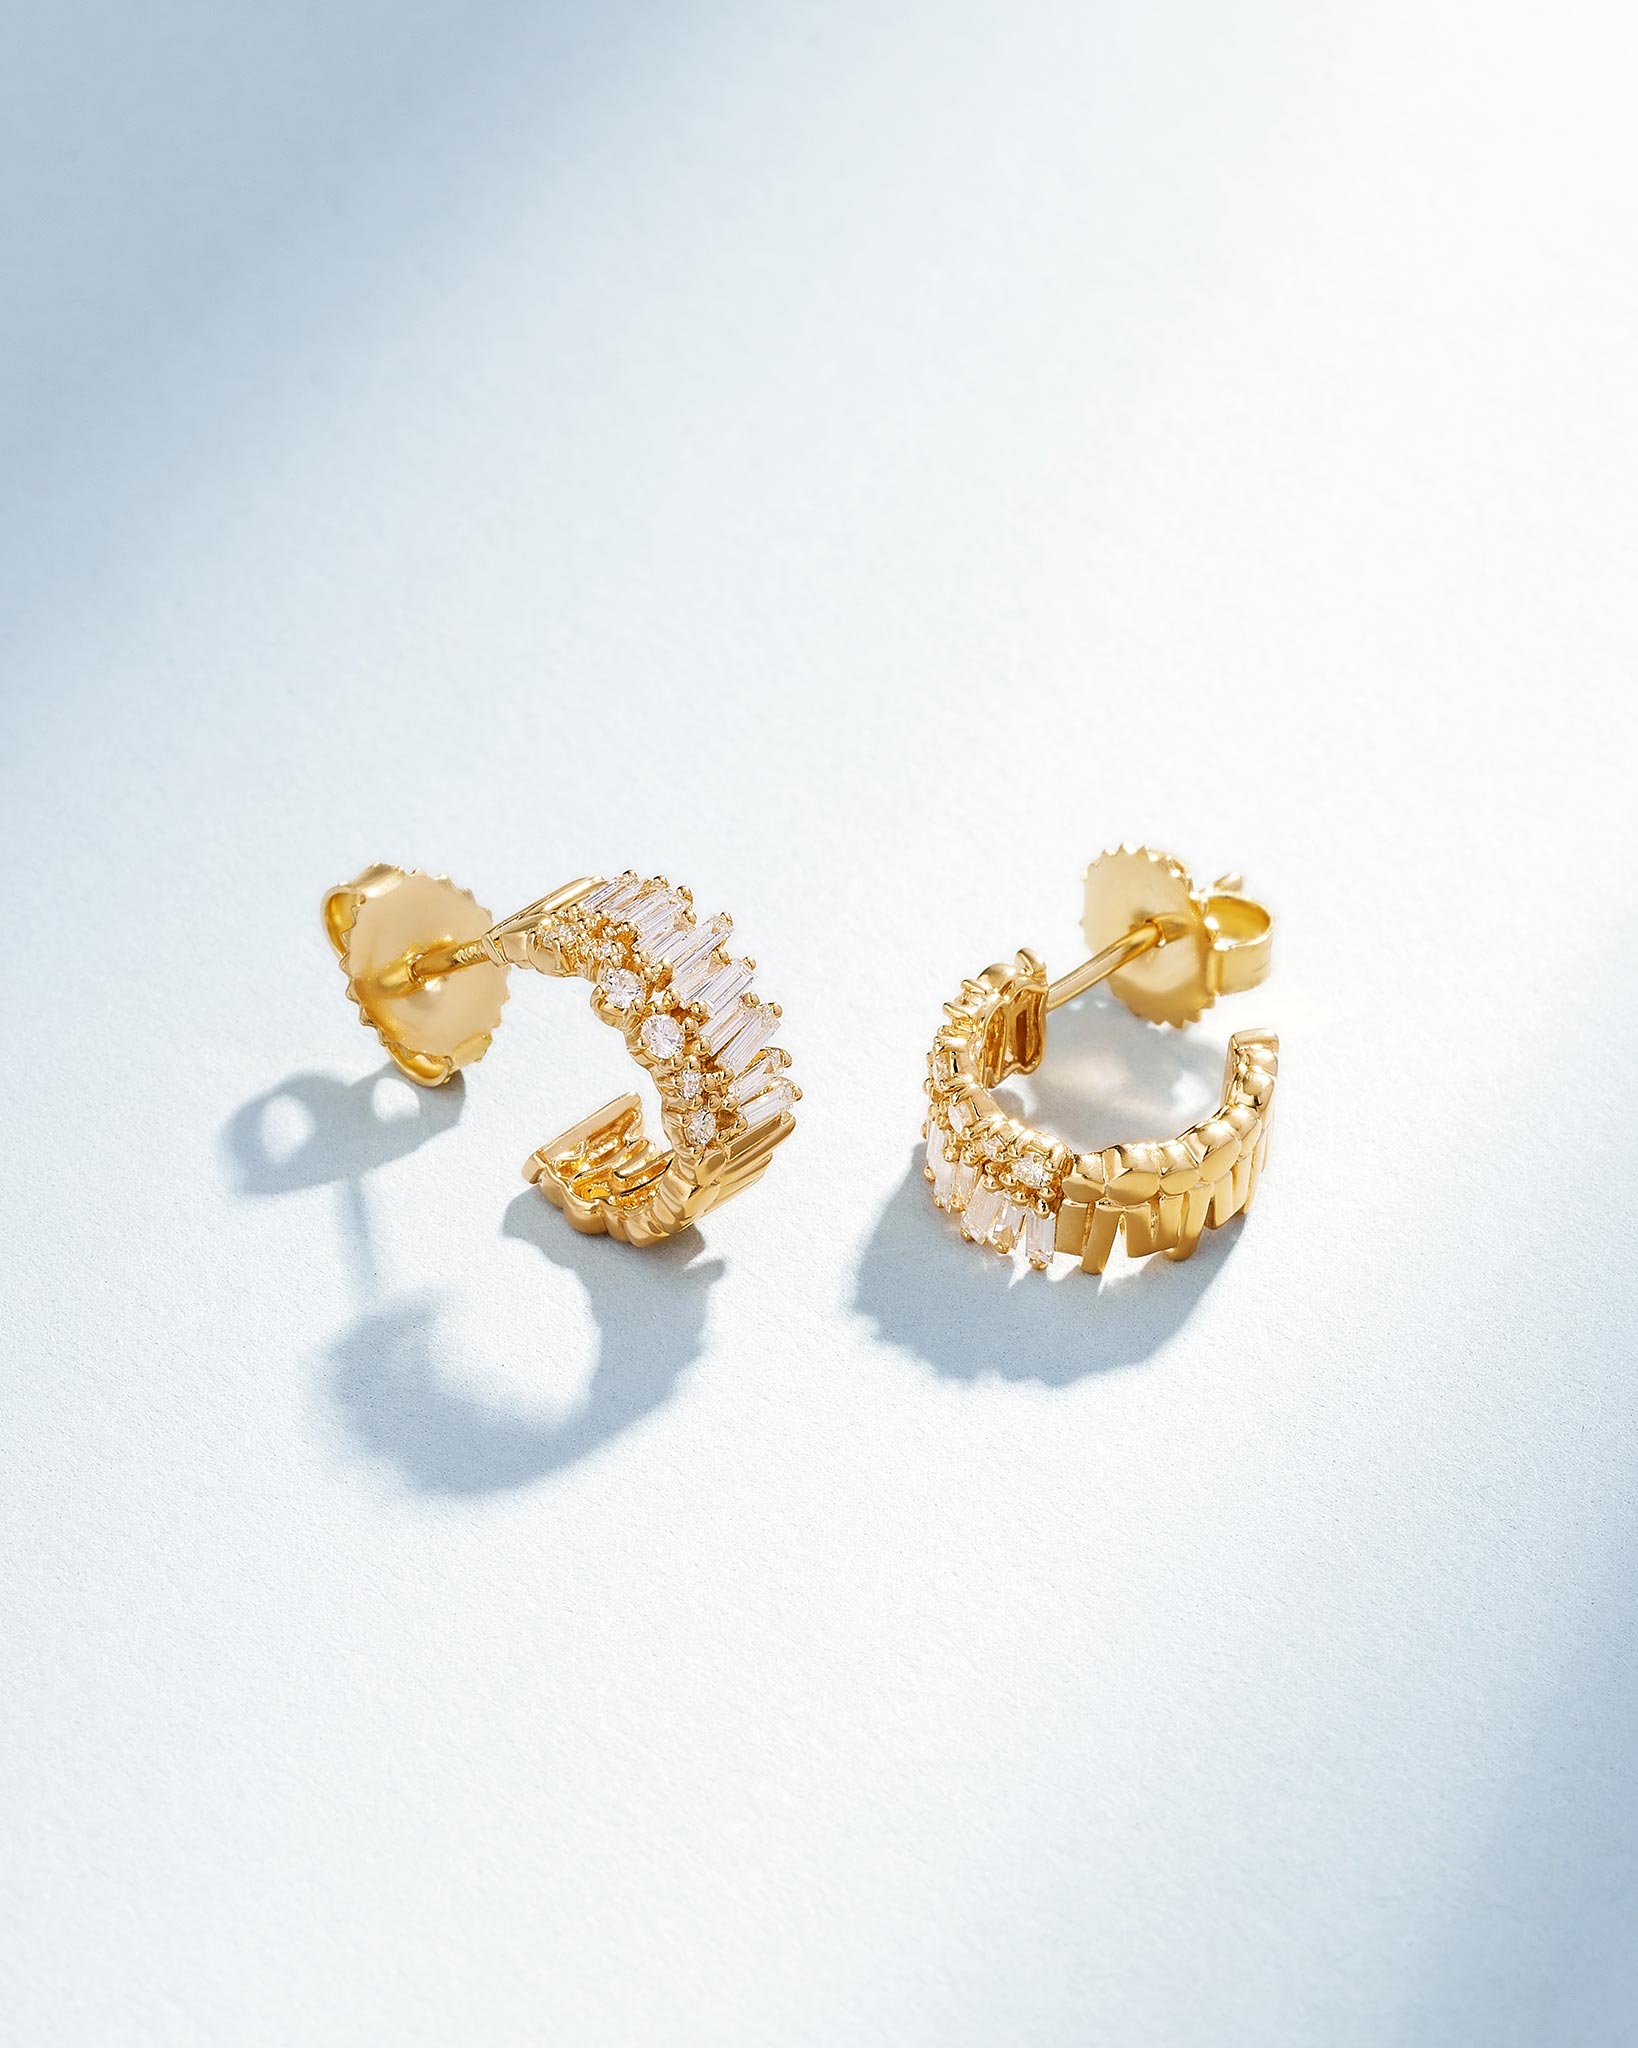 Suzanne Kalan Classic Diamond Short Stack Mini Hoop Earrings in 18k yellow gold